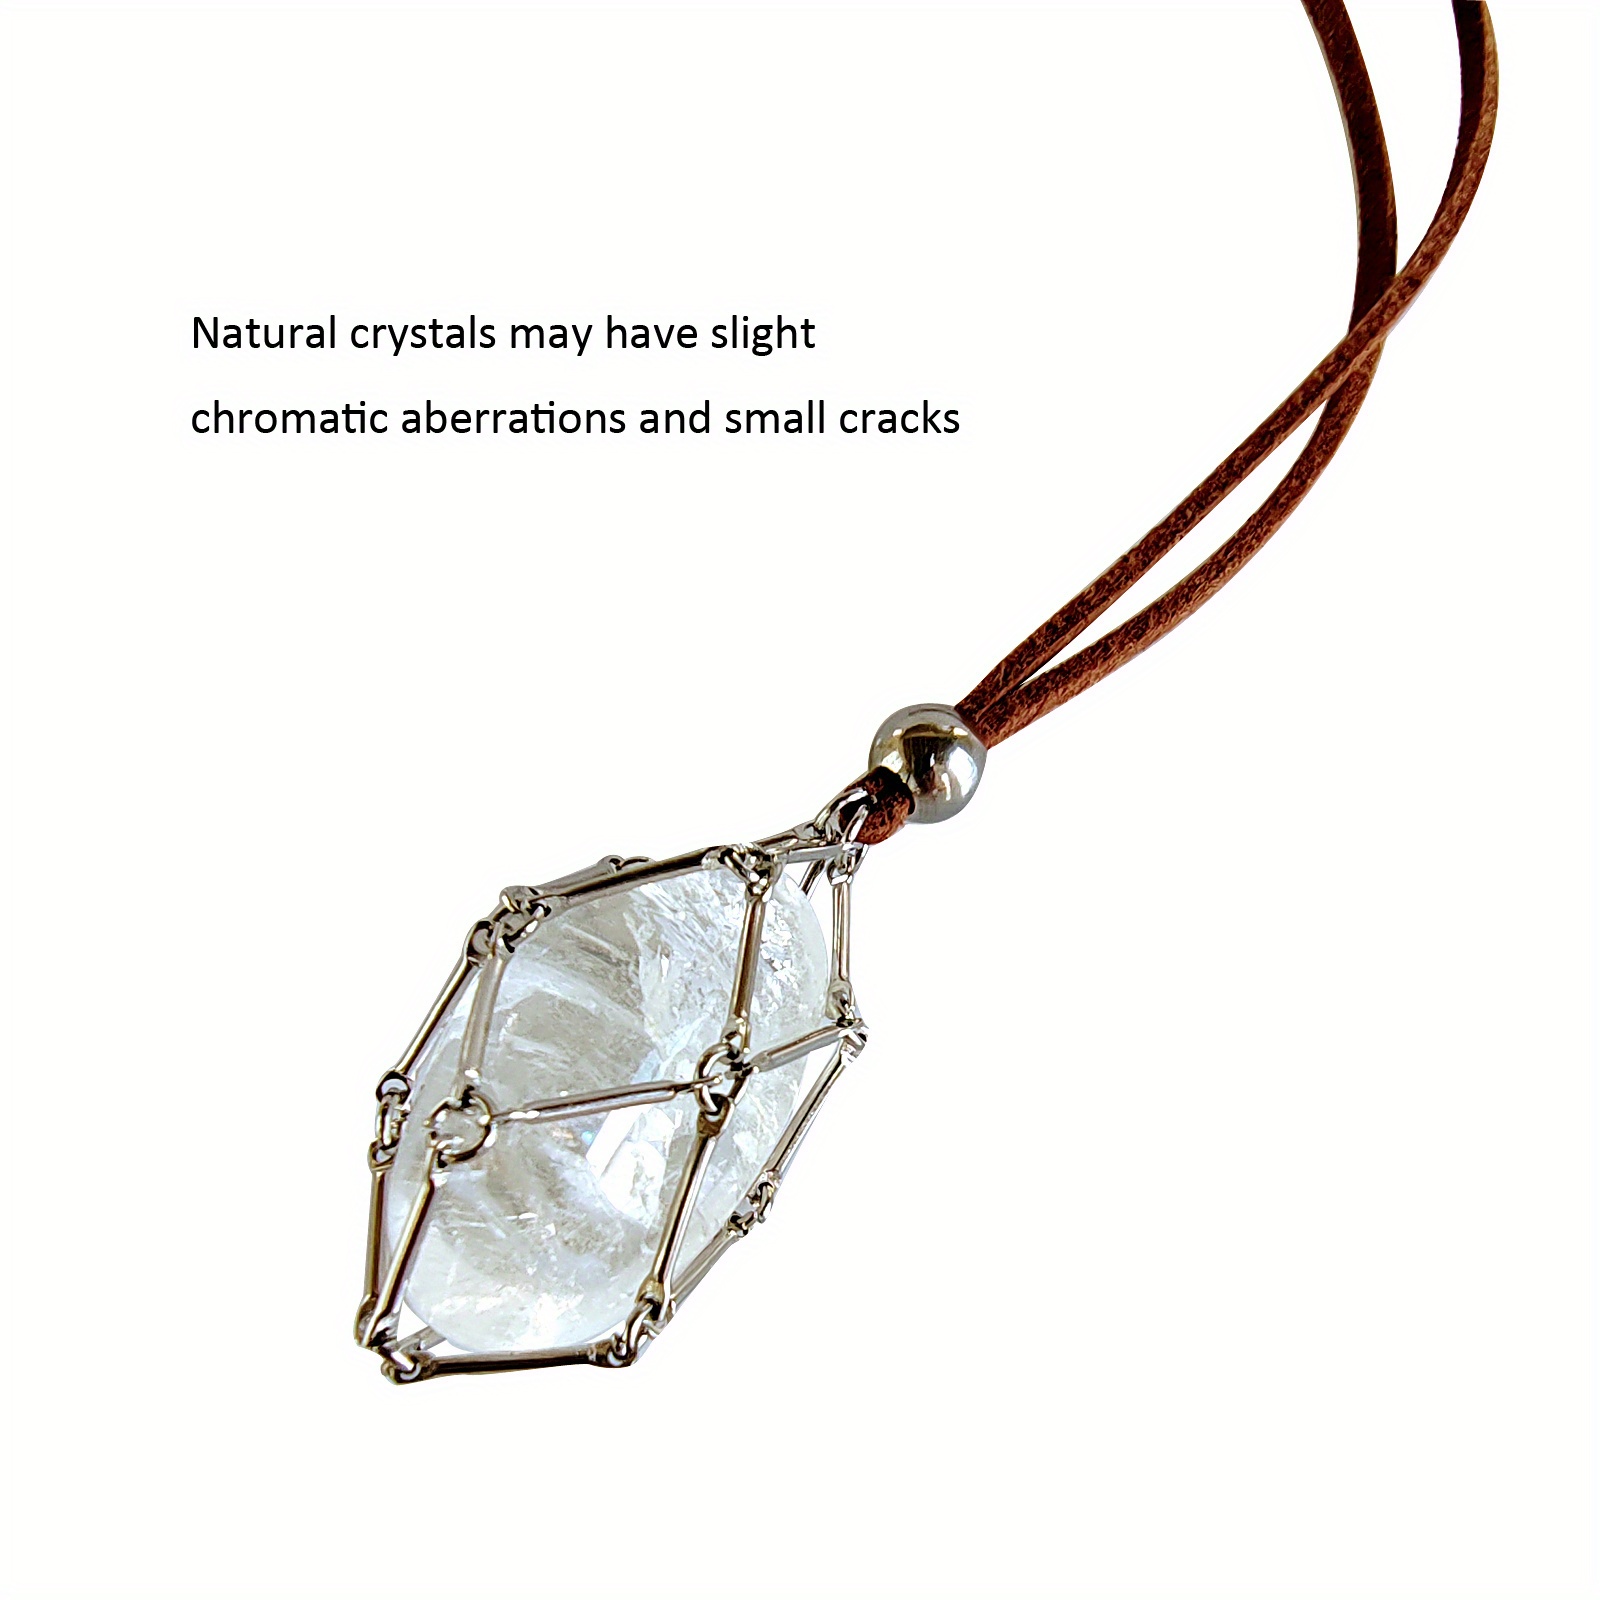 Crystal Stone Holder Necklace,Adjustable Crystal Cage Necklace Holder Necklace,Handmade Crystal Holder Necklace,Stainless Steel Cage for Crystal Stone